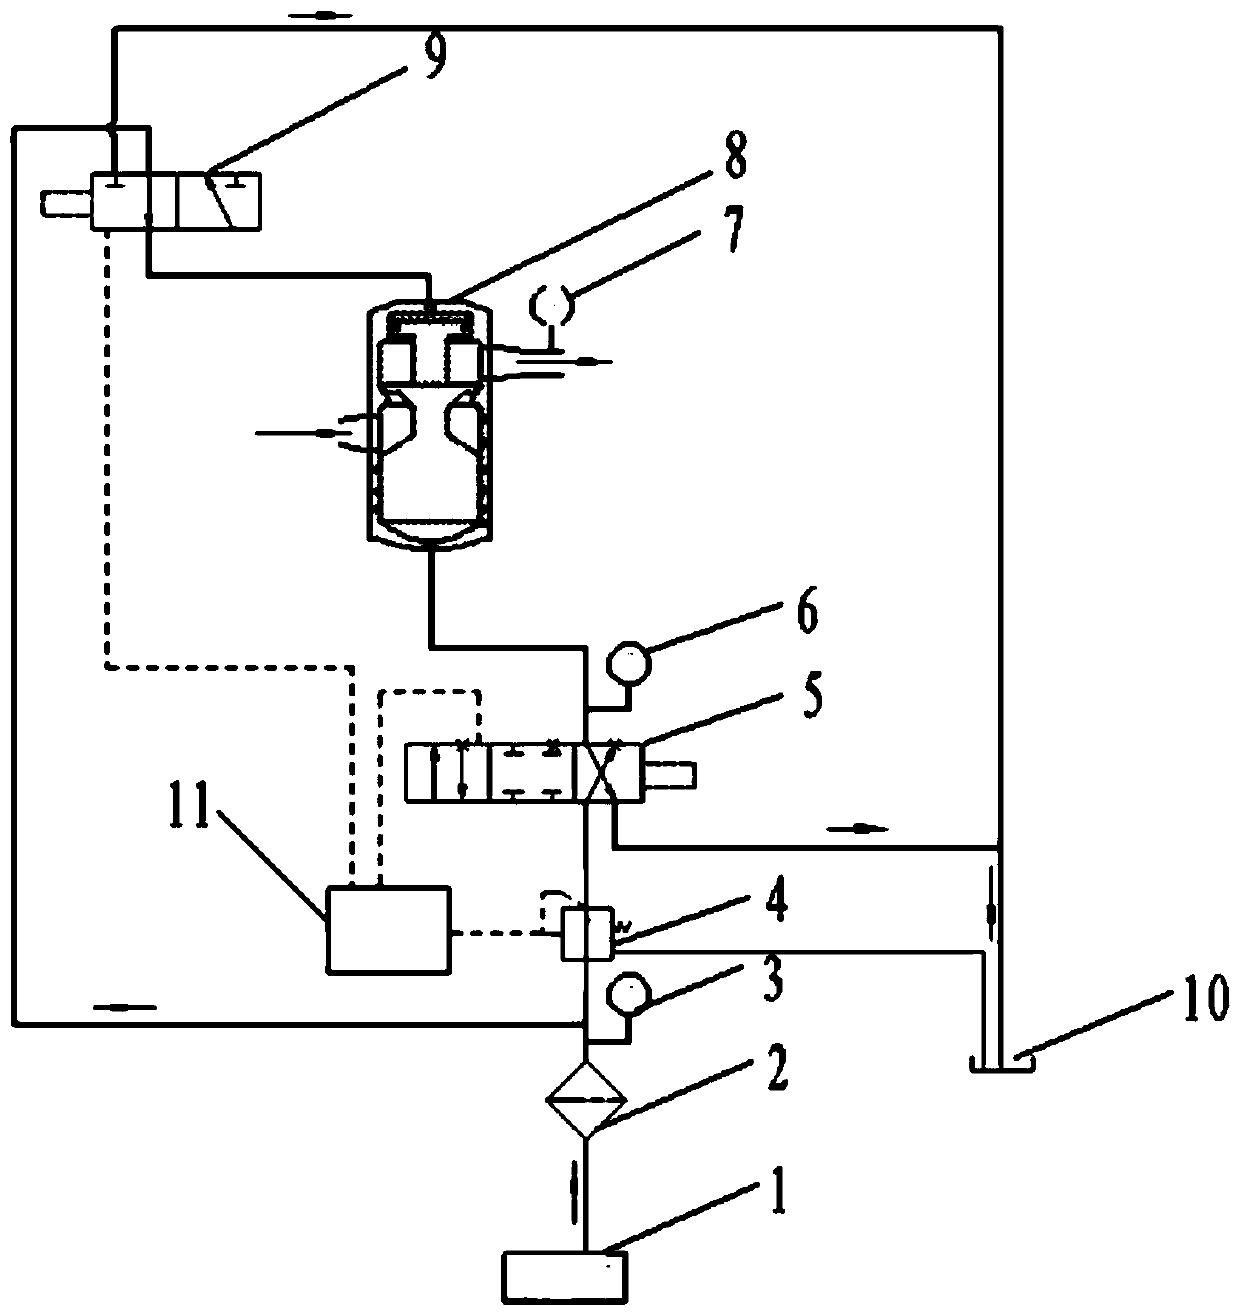 A self-balancing pressure regulating valve pressure regulating hydraulic system and its control method